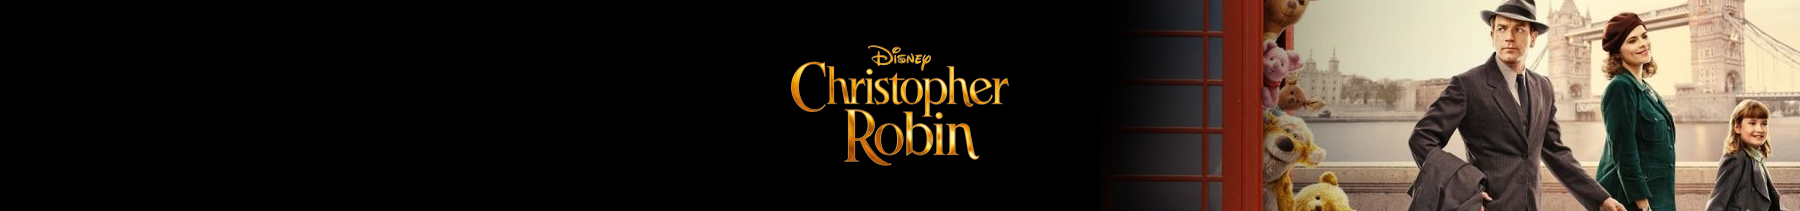 christopher robin